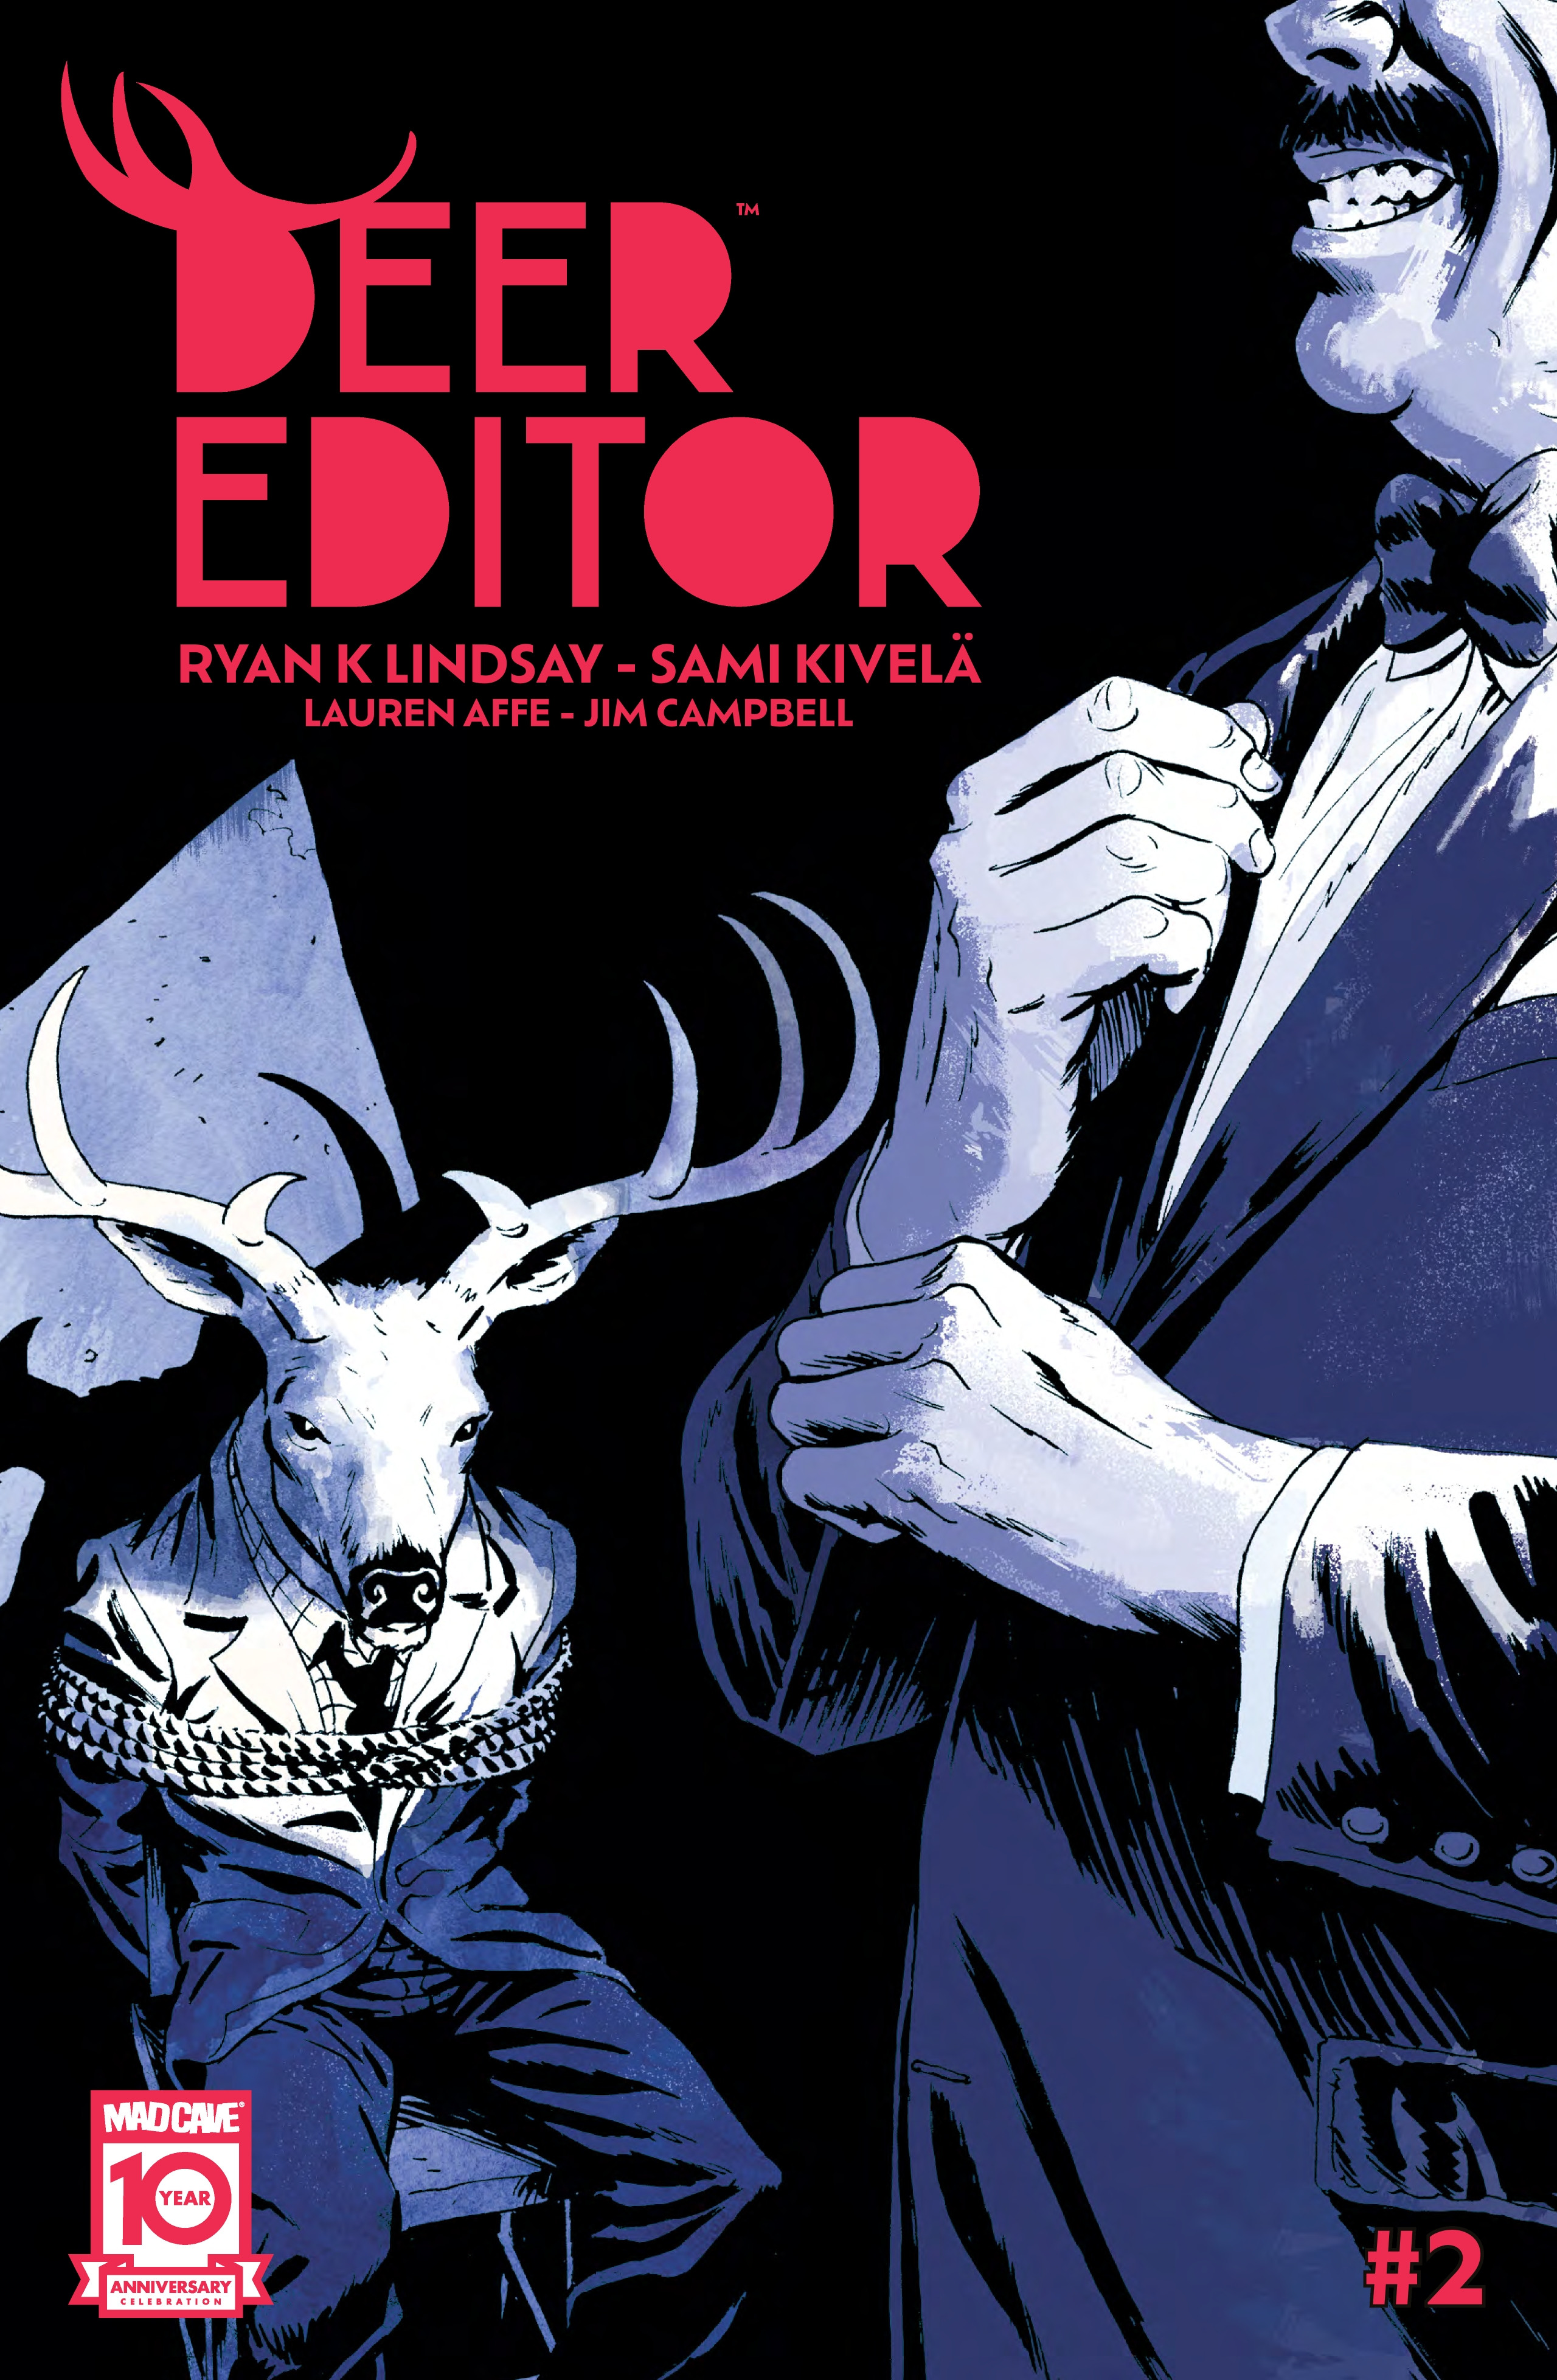 Read online Deer Editor comic -  Issue #2 - 1